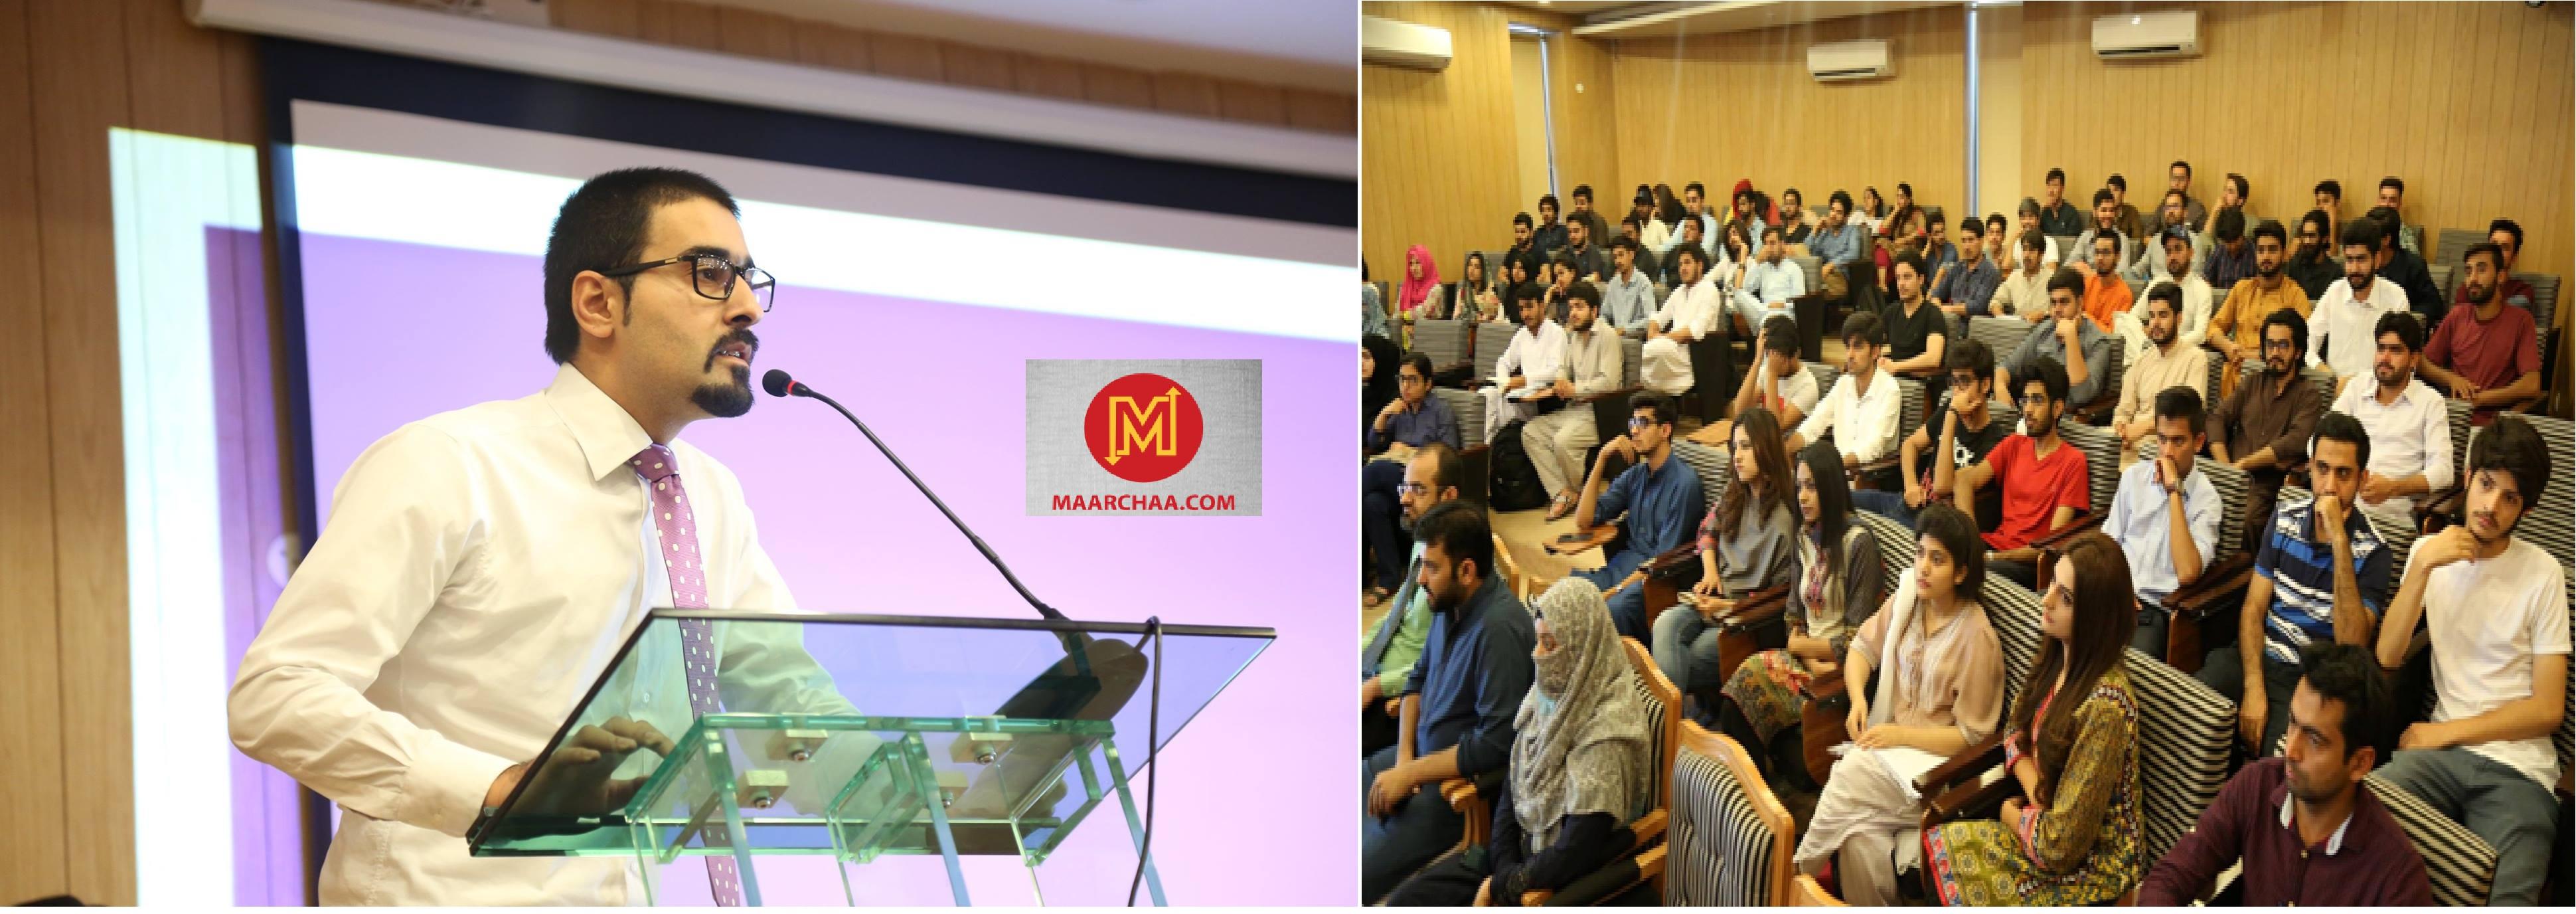 Maarchaa.com holds seminar on Digital Entrepreneurship and Bartering